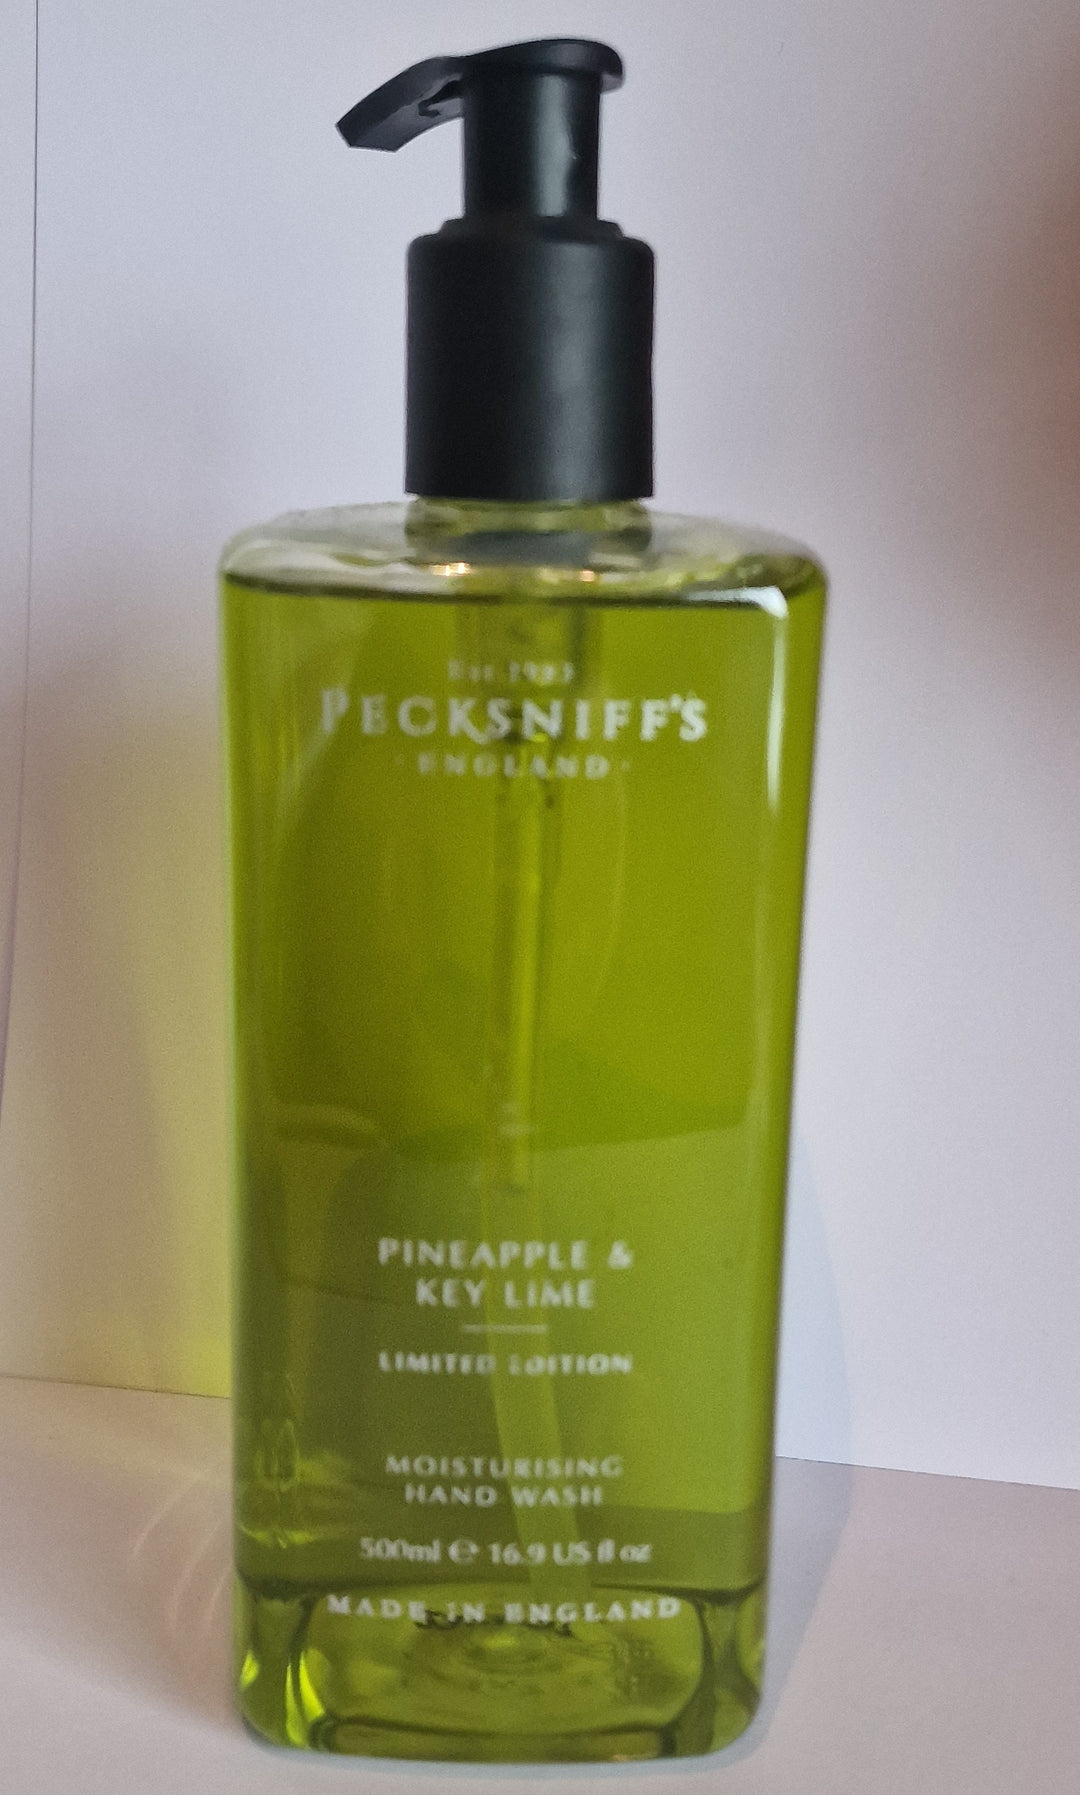 Pecksniff's Pineapple & Key Lime , Moisturizing Hand Wash 500 ml